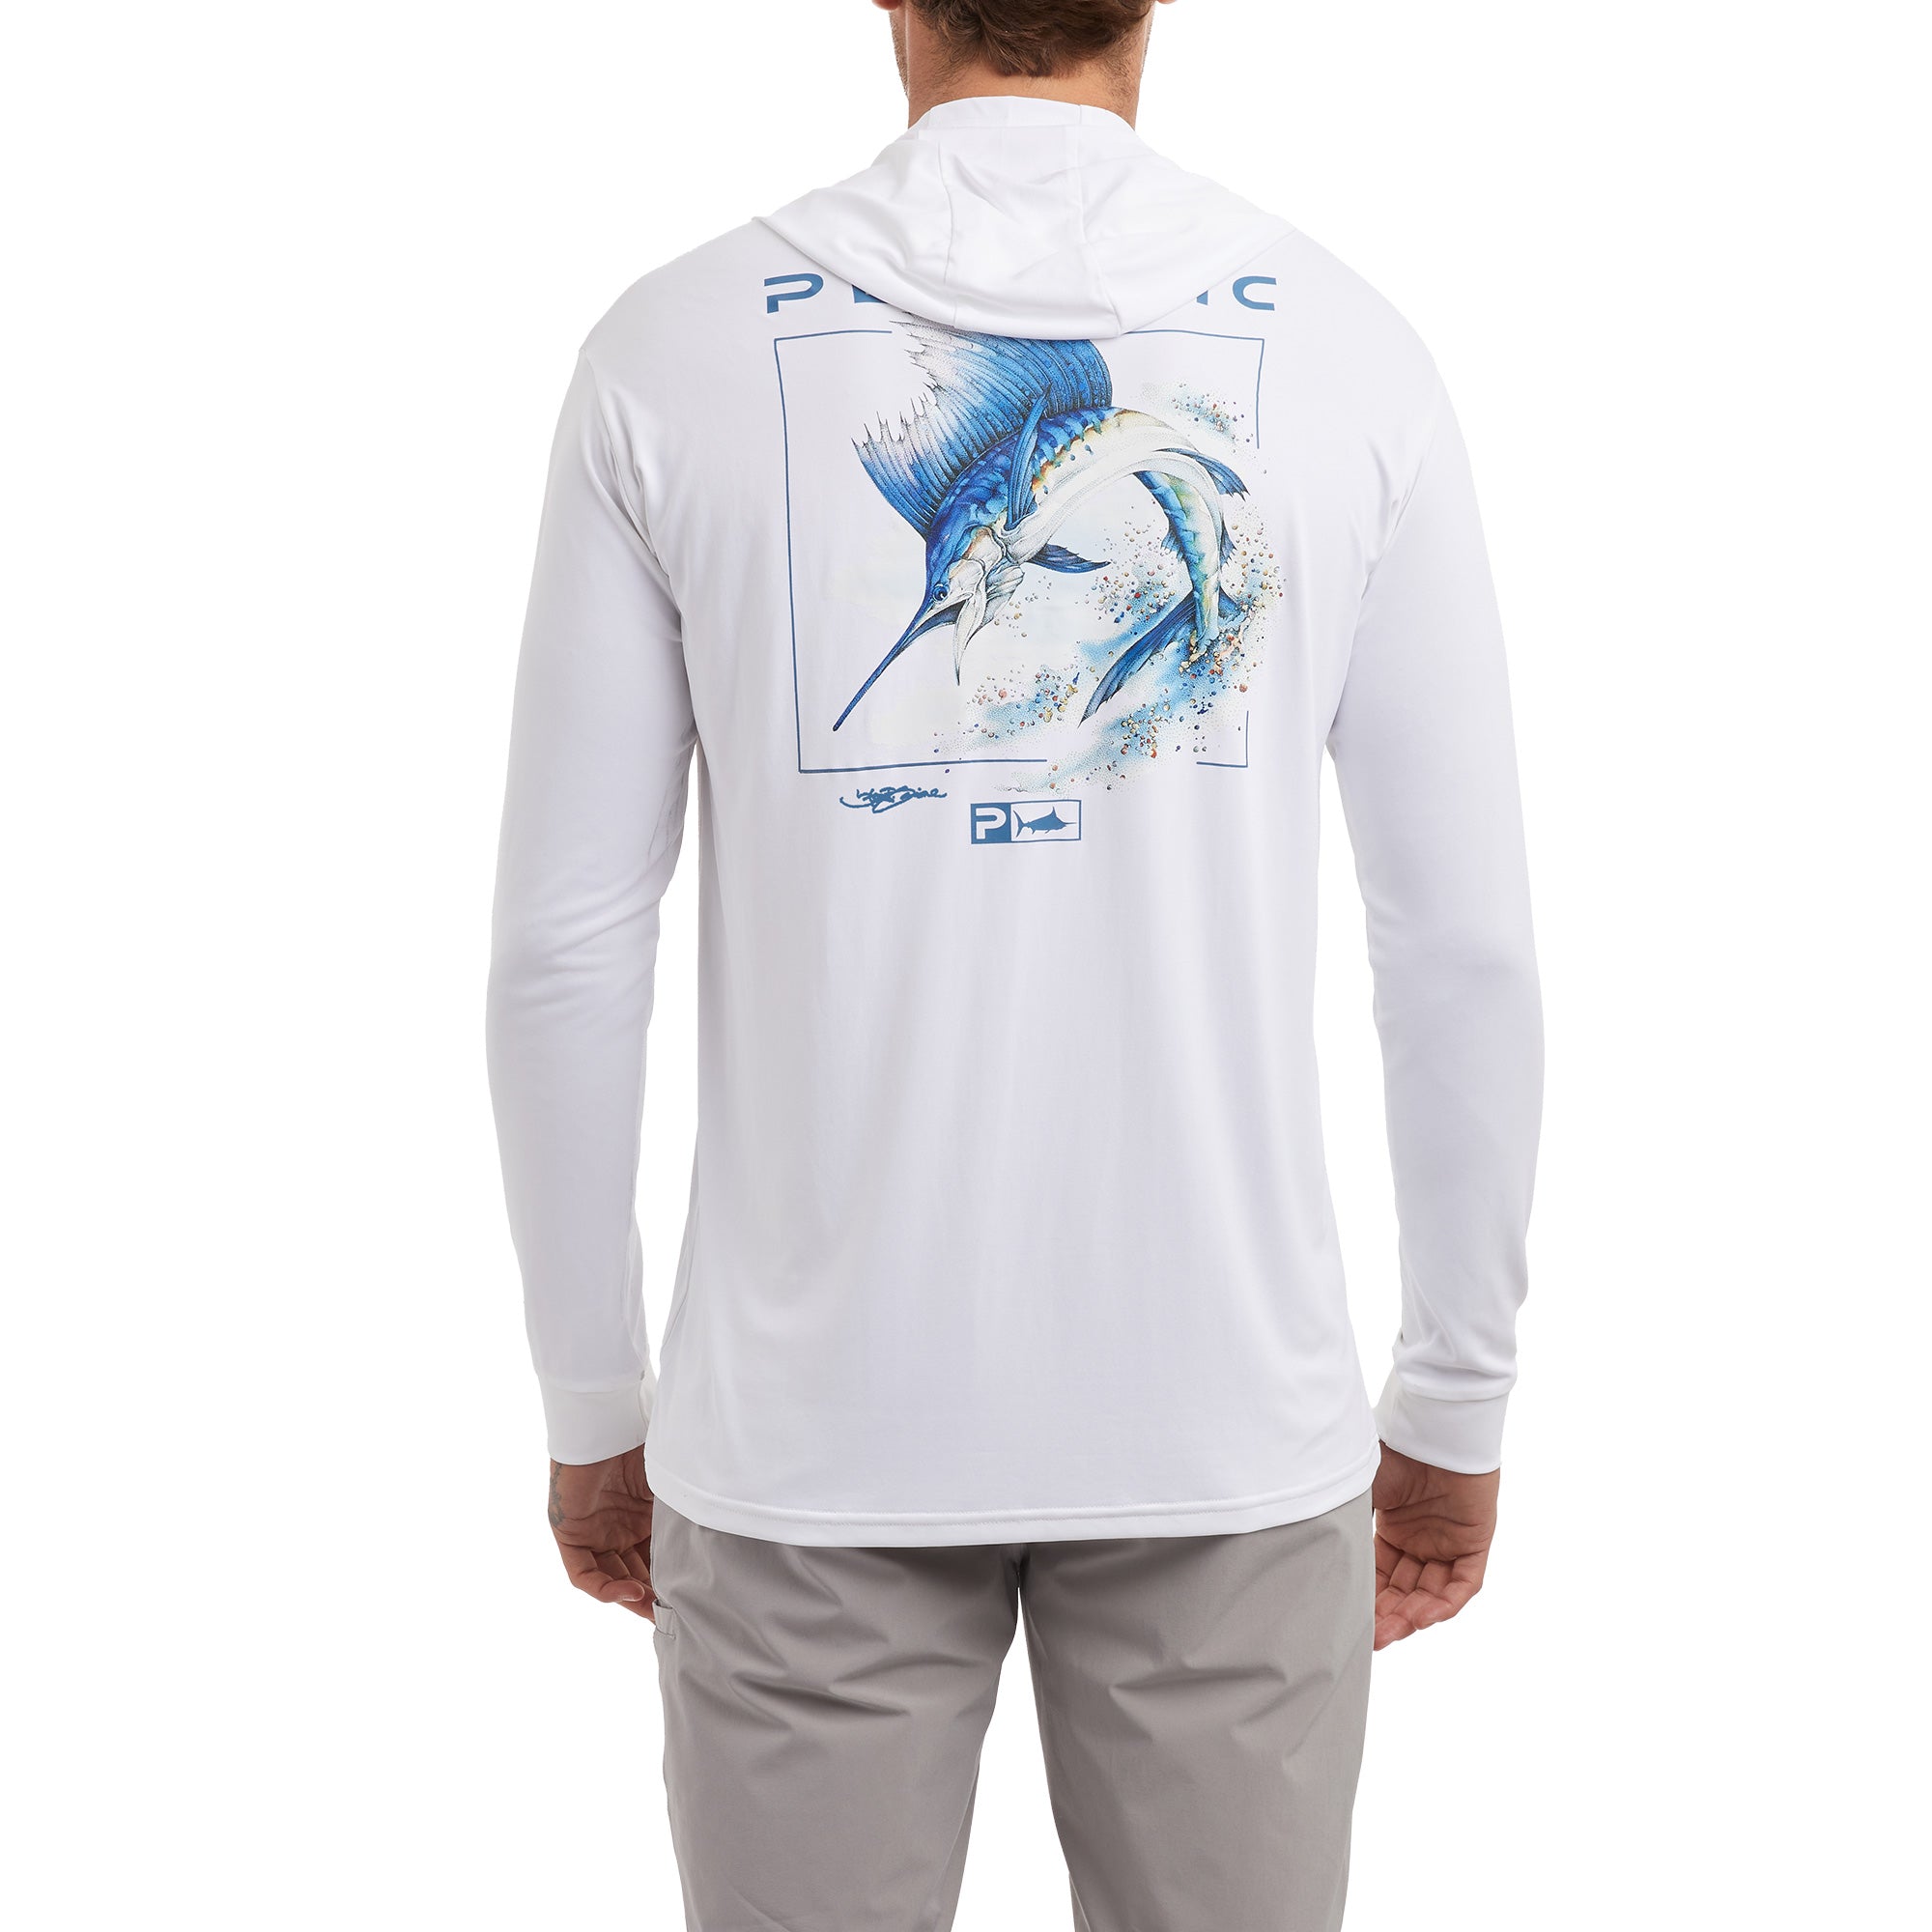 Team Baitball Fishing Shirt Men's Long Sleeve T-Shirt Light Blue Sword Fish